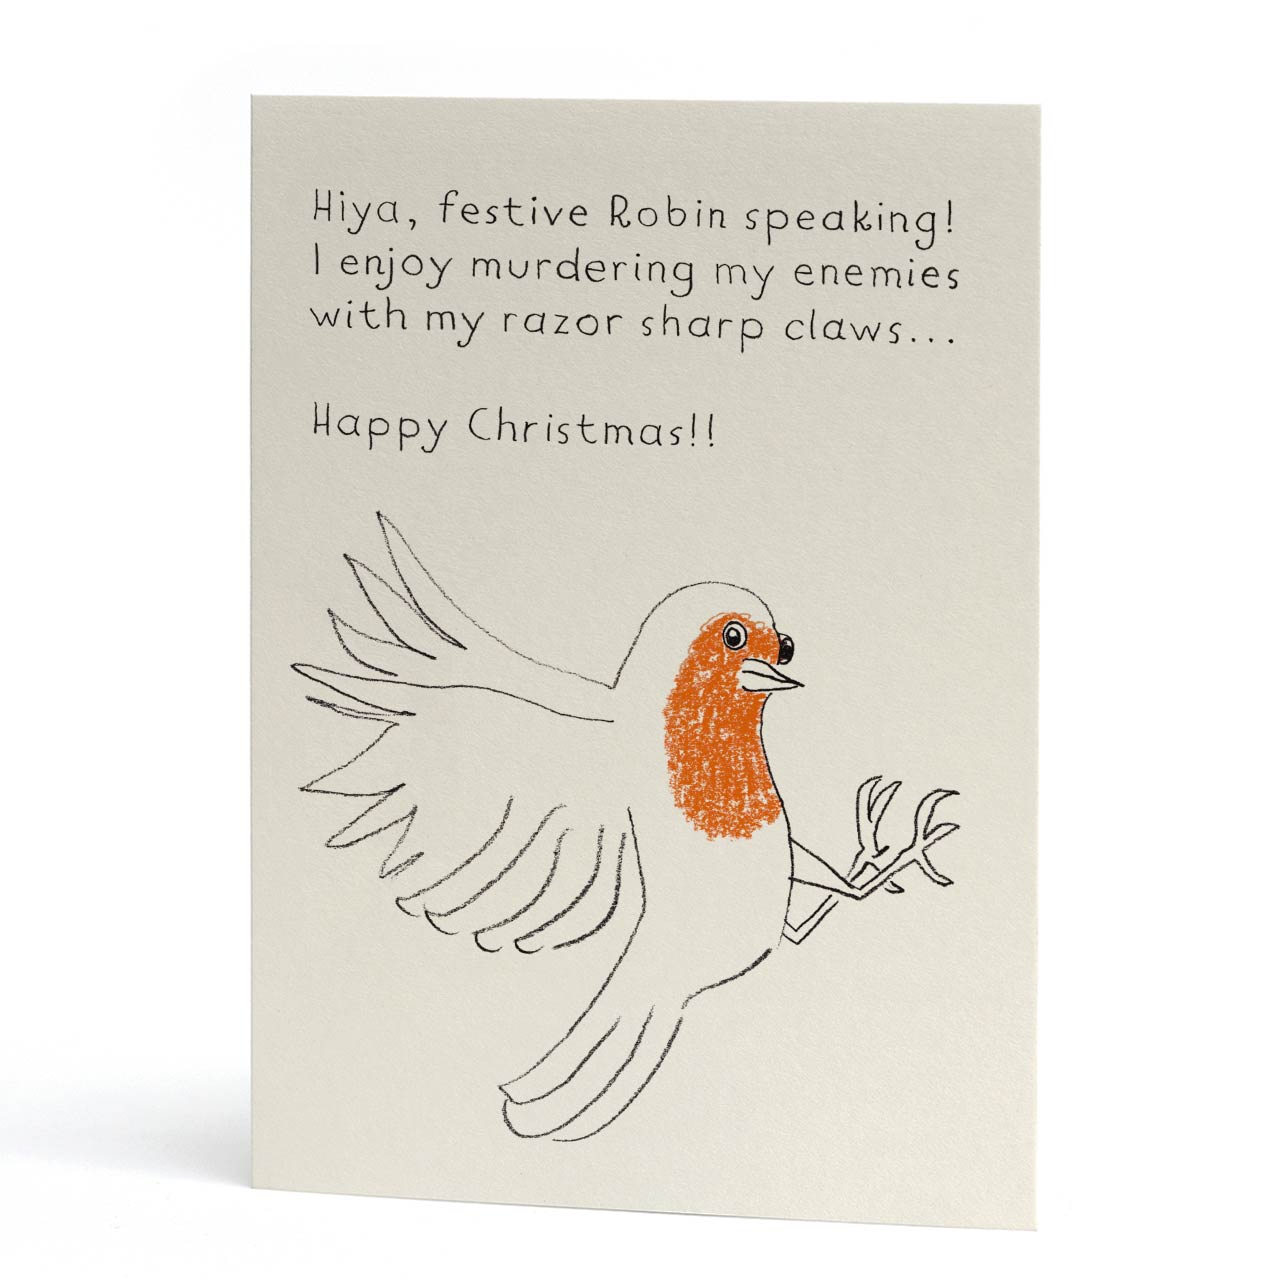 Razor Sharp Claws Robin Christmas Card